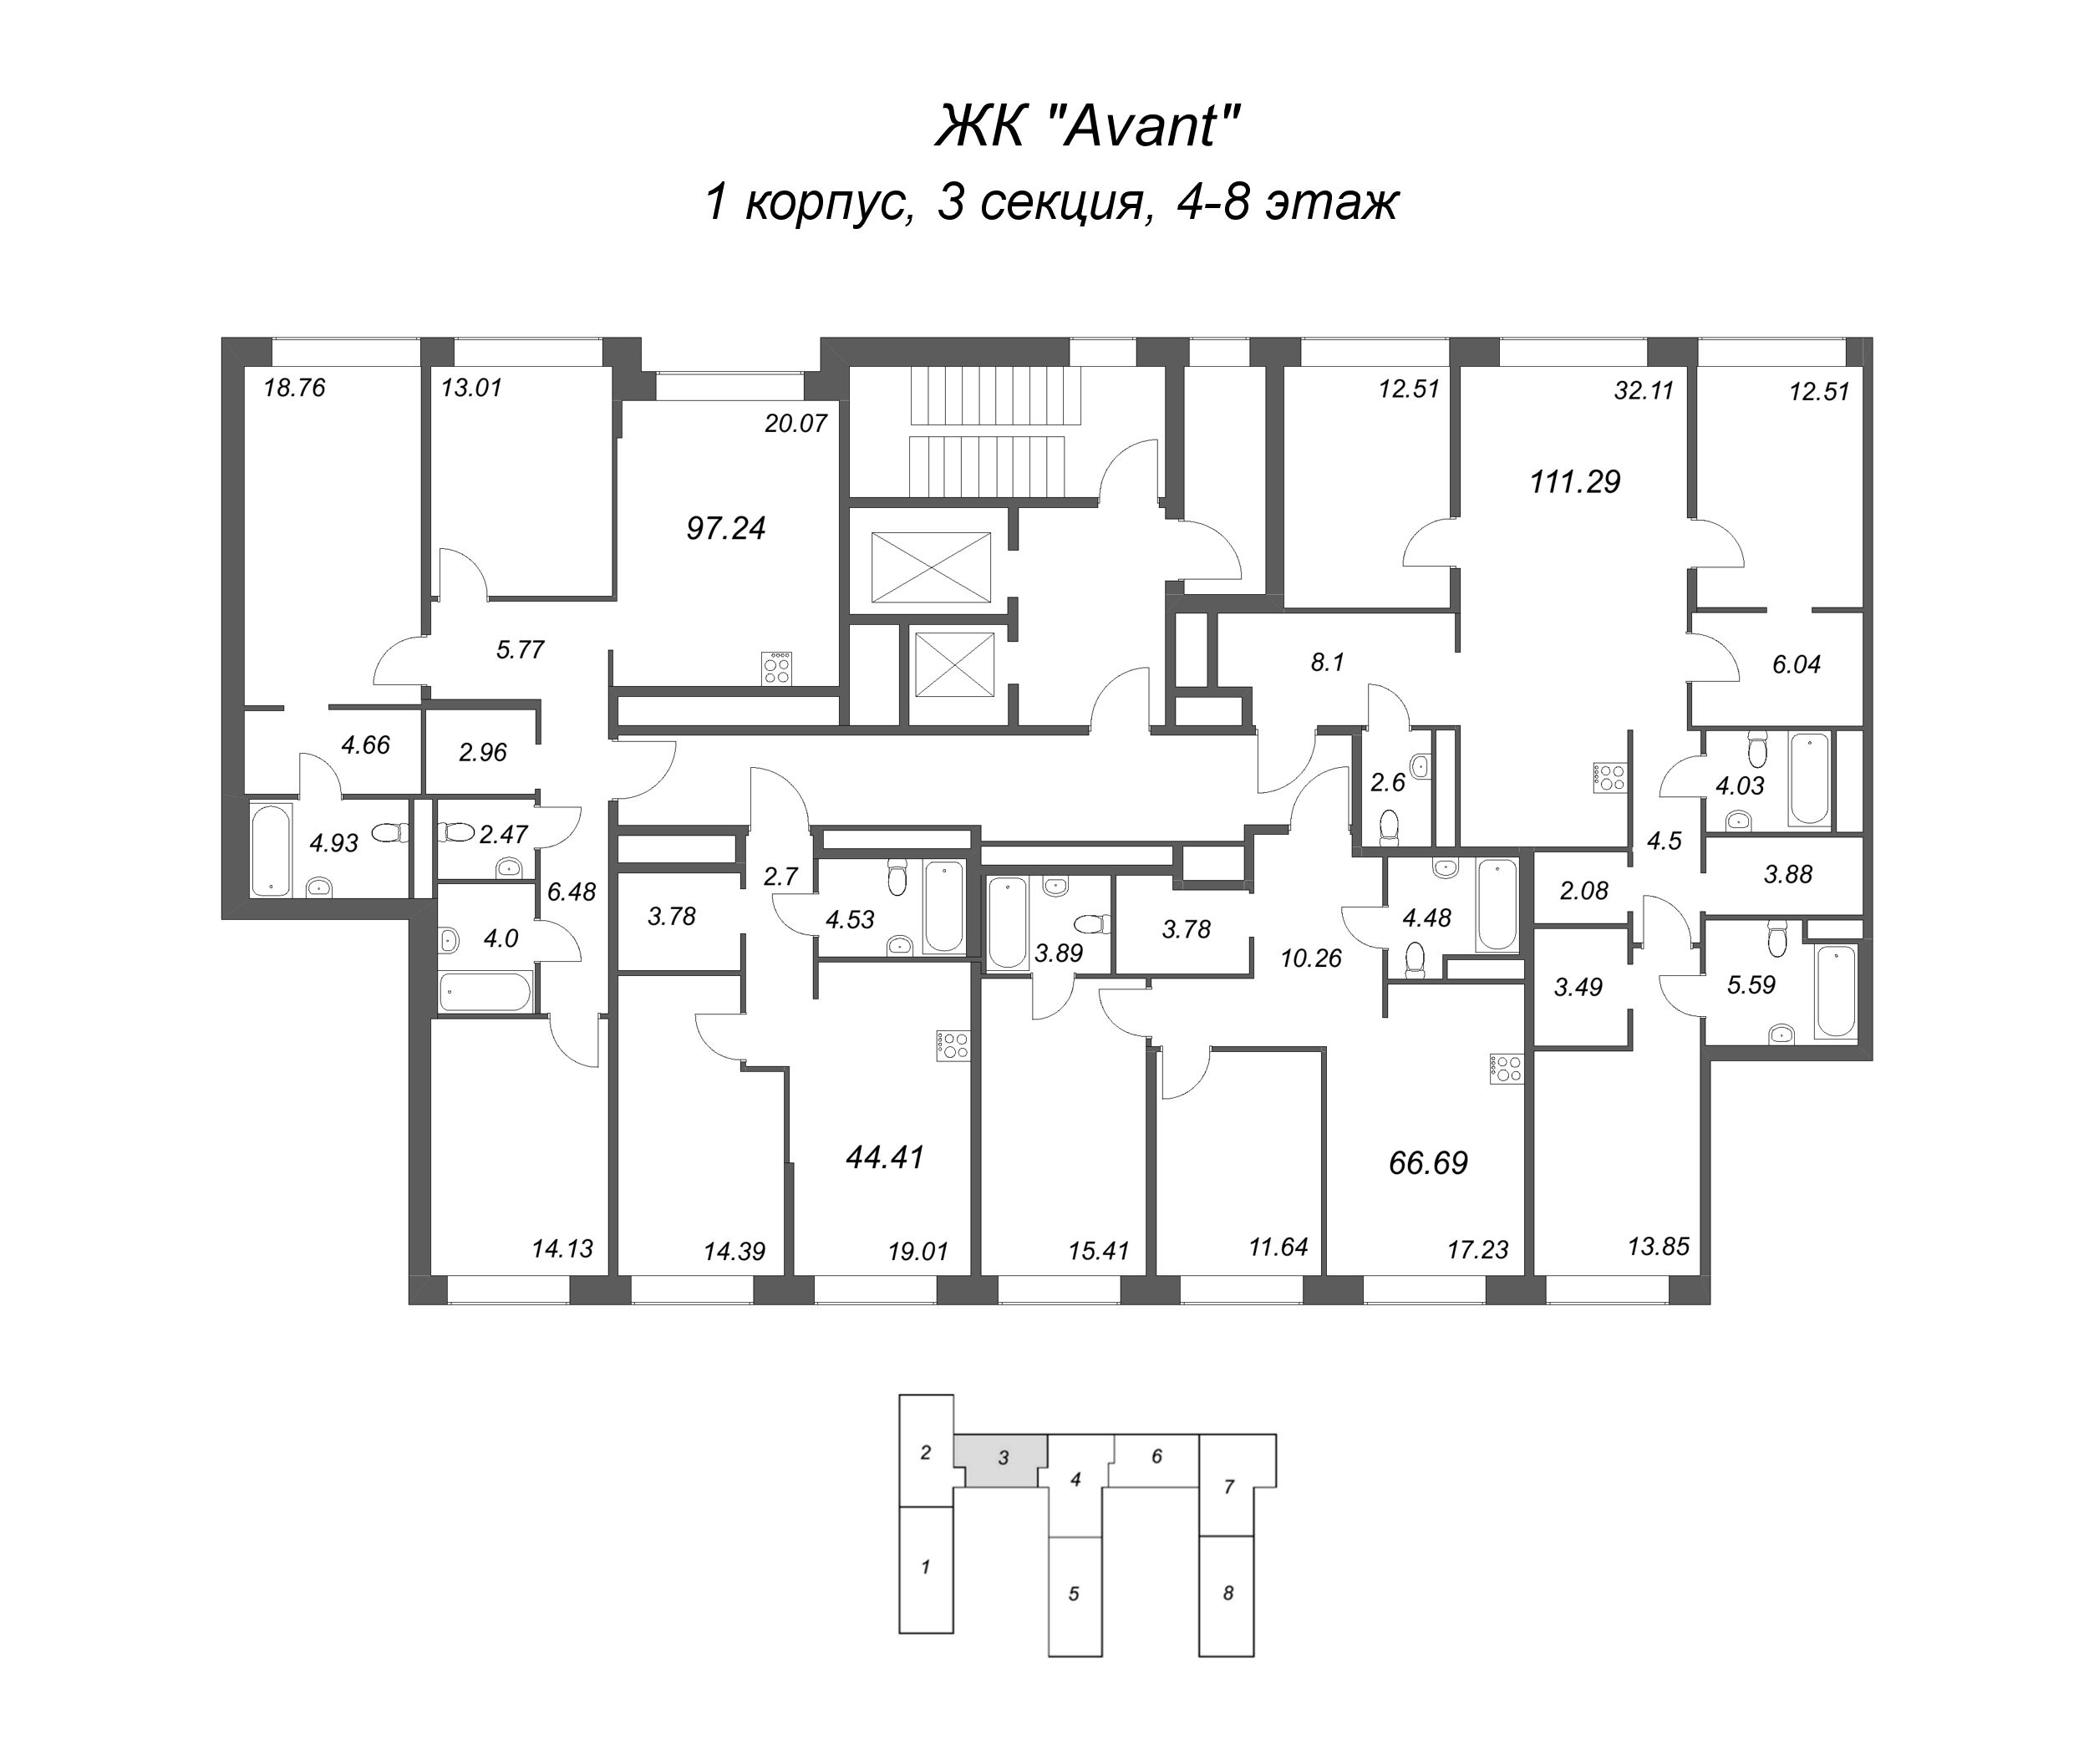 4-комнатная (Евро) квартира, 97.24 м² - планировка этажа